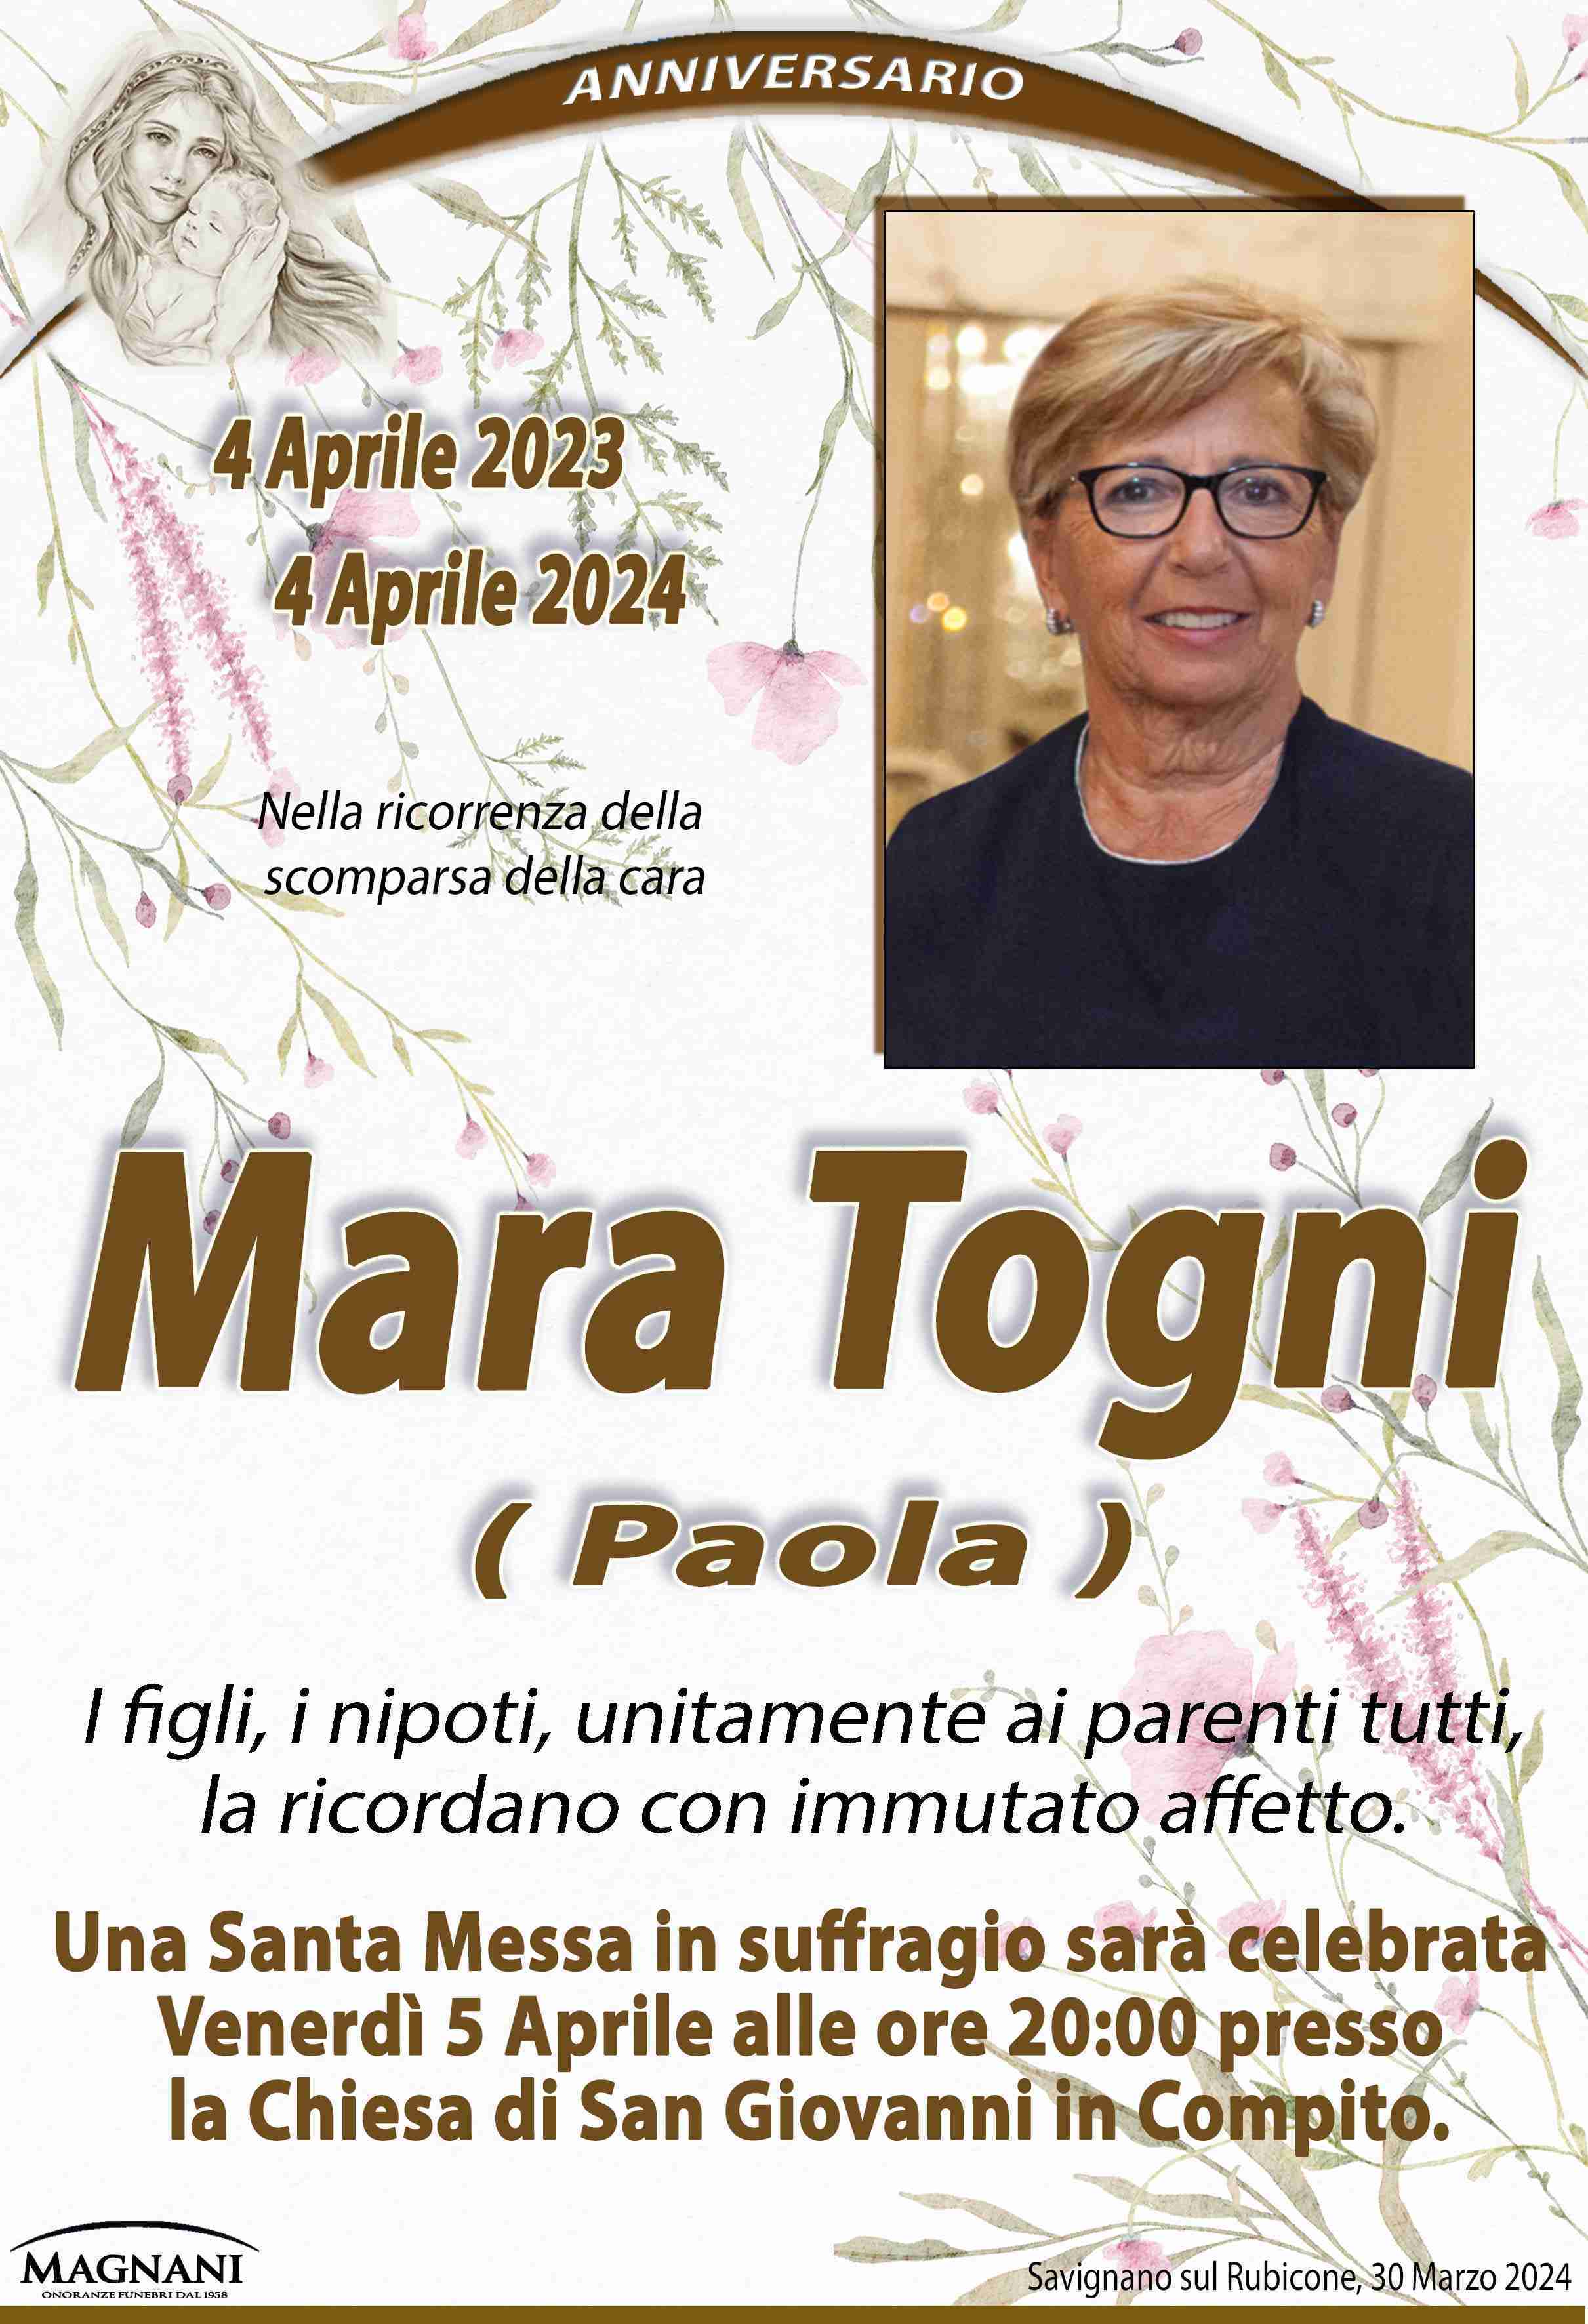 Mara Togni